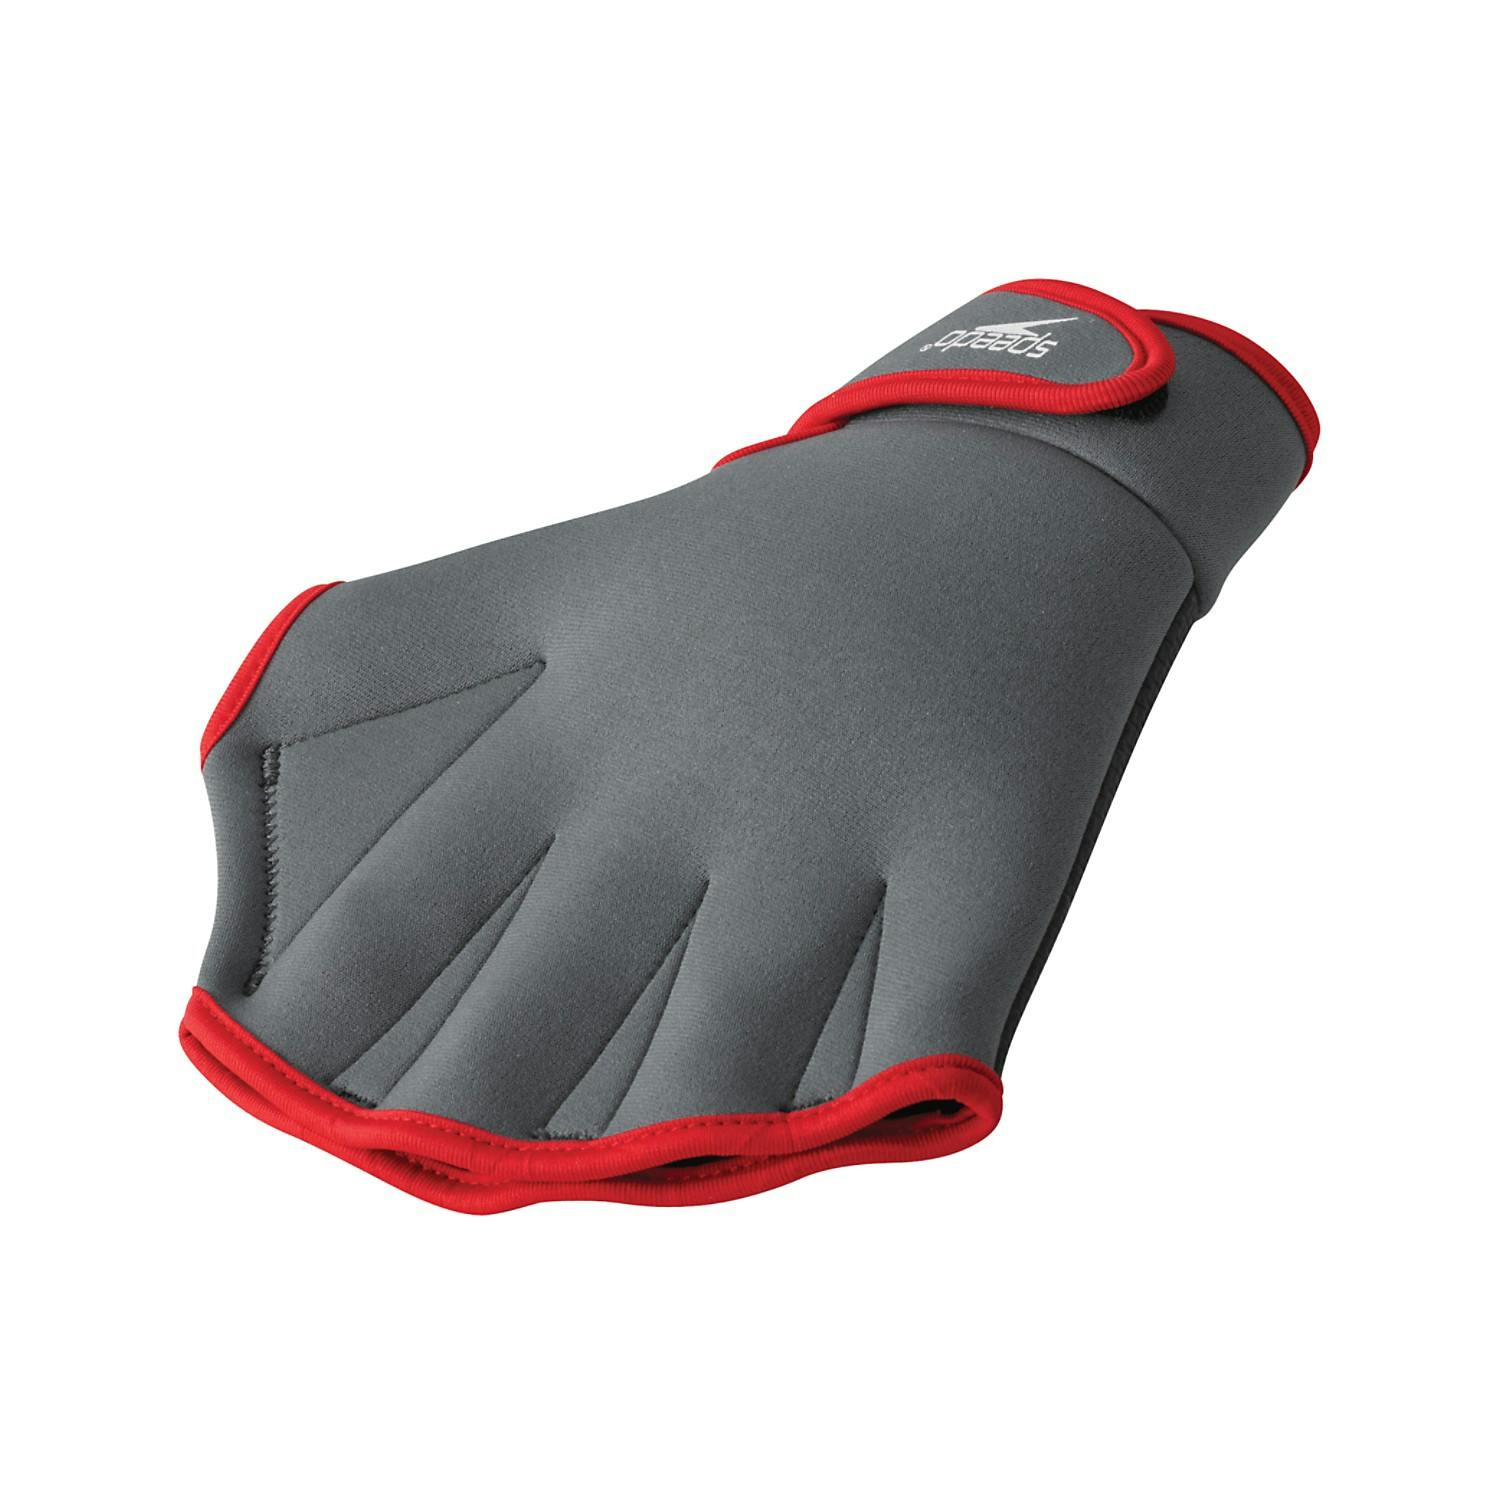 Speedo Aqua Fitness Glove - Charcoal